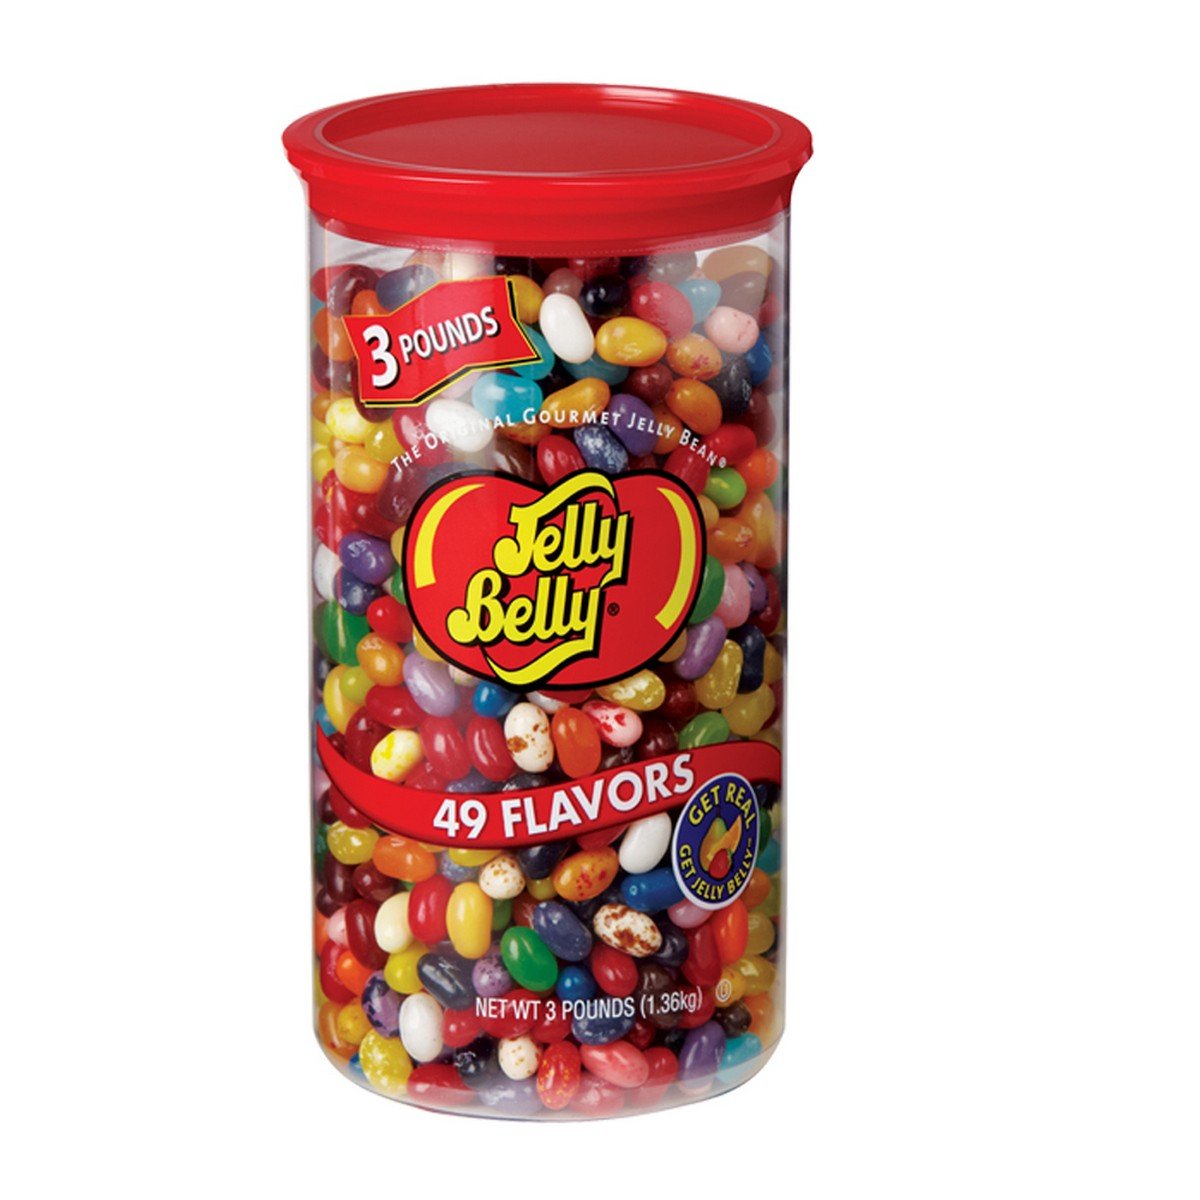 Jelly 7. Джелли Белли. Джелли Белли вкусы. Jelly belly 49 flavors. Джелли Бин вкусы.